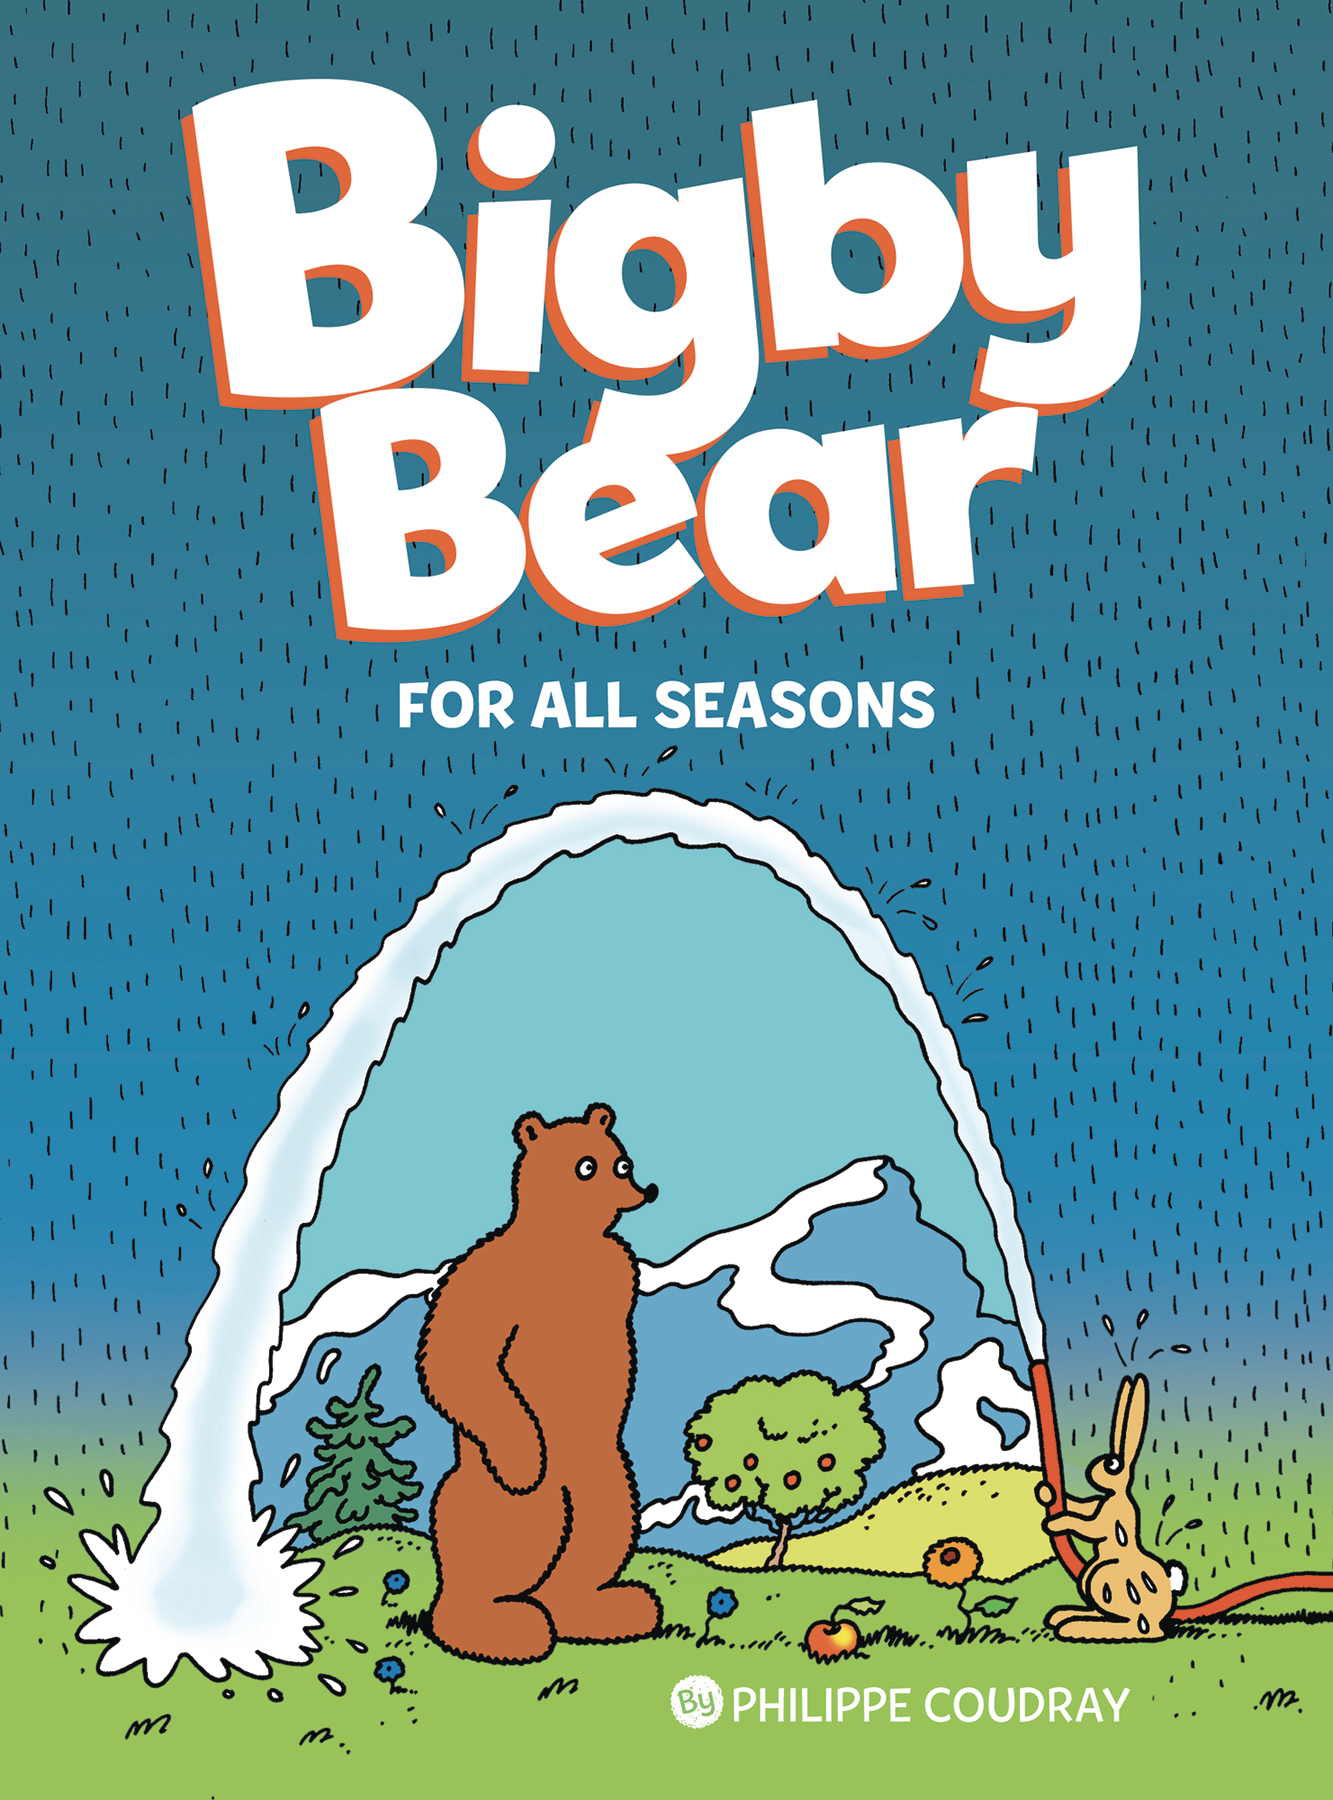 Bigby Bear Hardcover Volume 2 For All Seasons